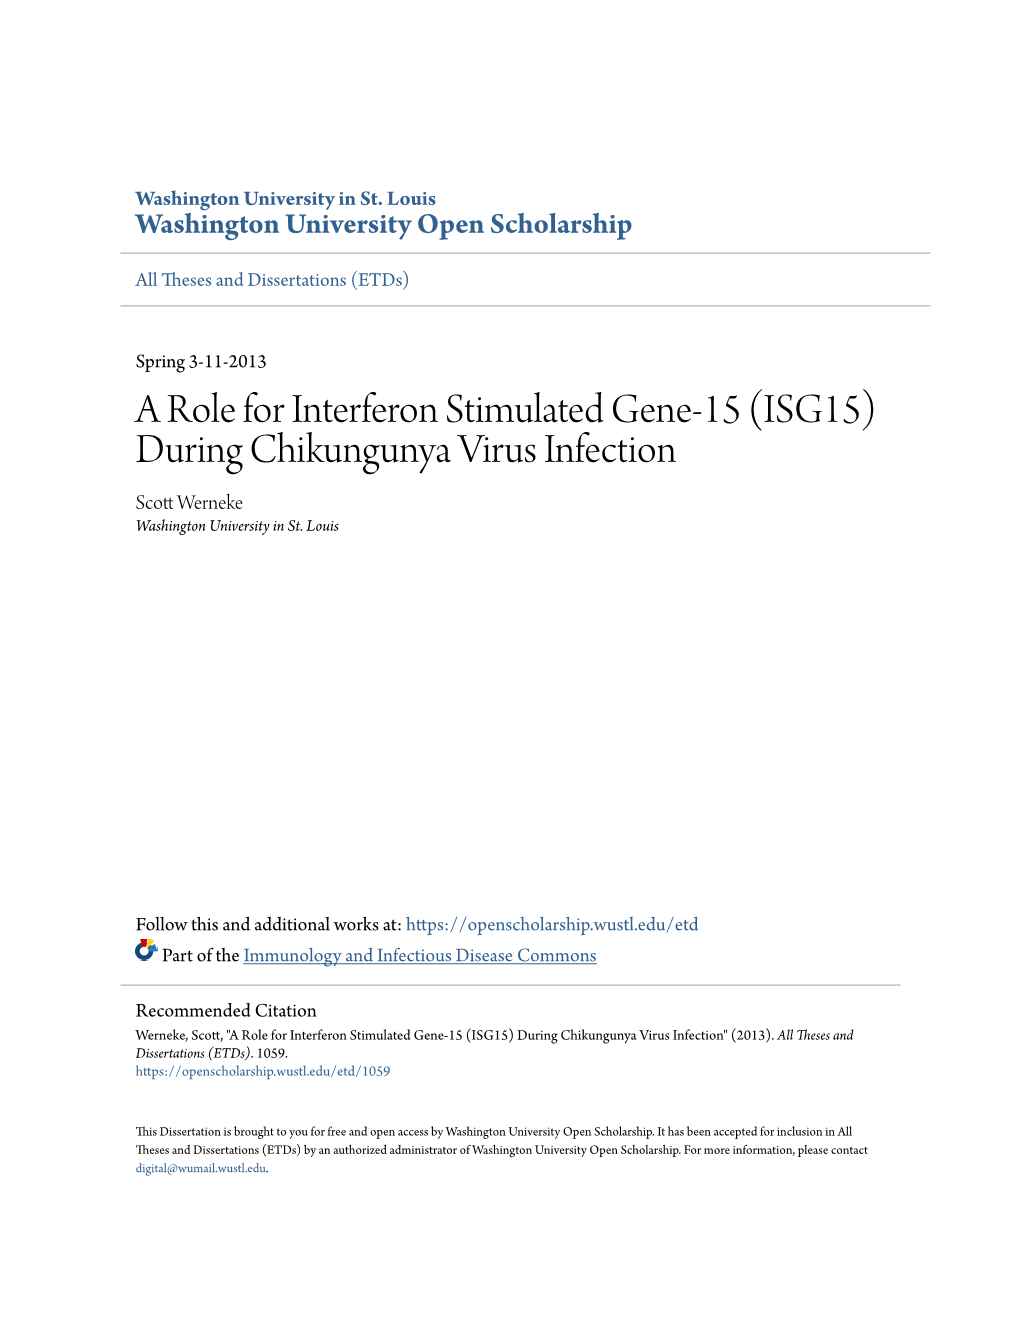 A Role for Interferon Stimulated Gene-15 (ISG15) During Chikungunya Virus Infection Scott Ew Rneke Washington University in St